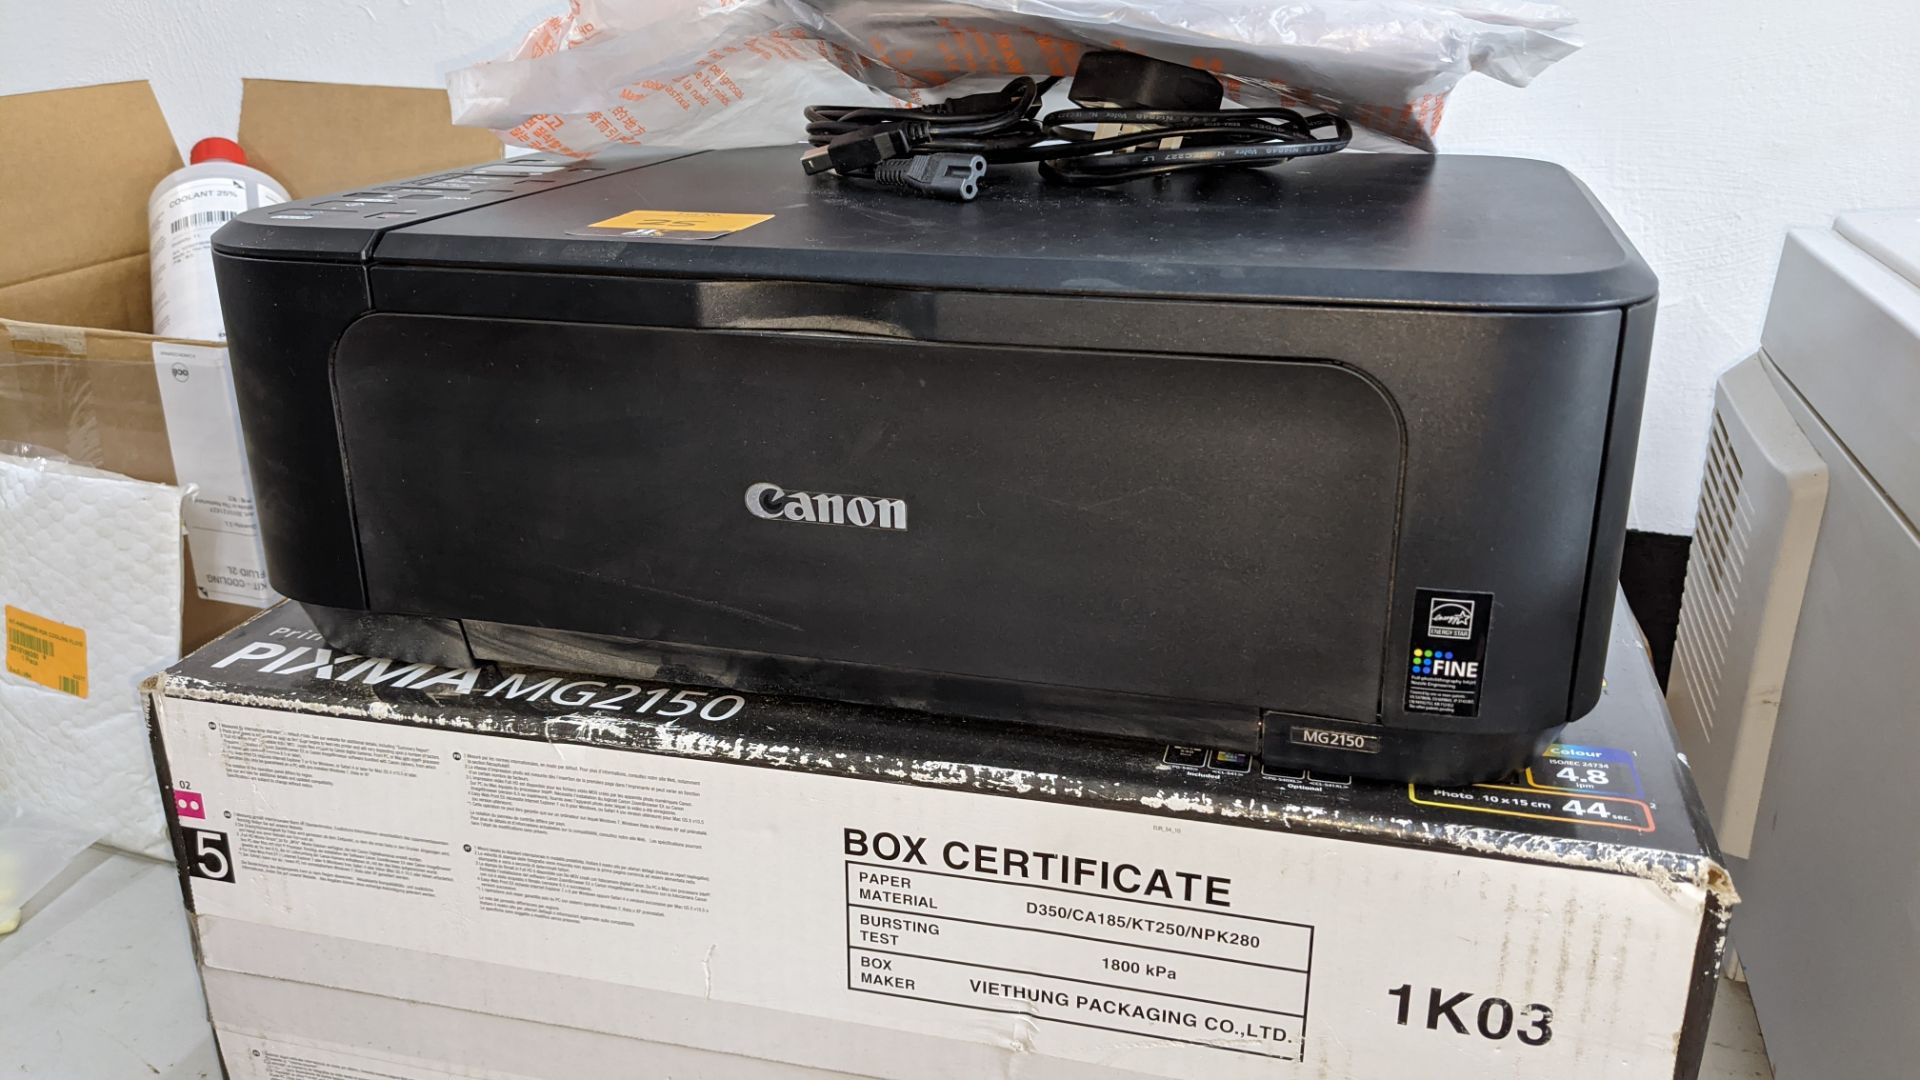 Canon Pixma MG2150 multifunction inkjet printer - Image 4 of 5